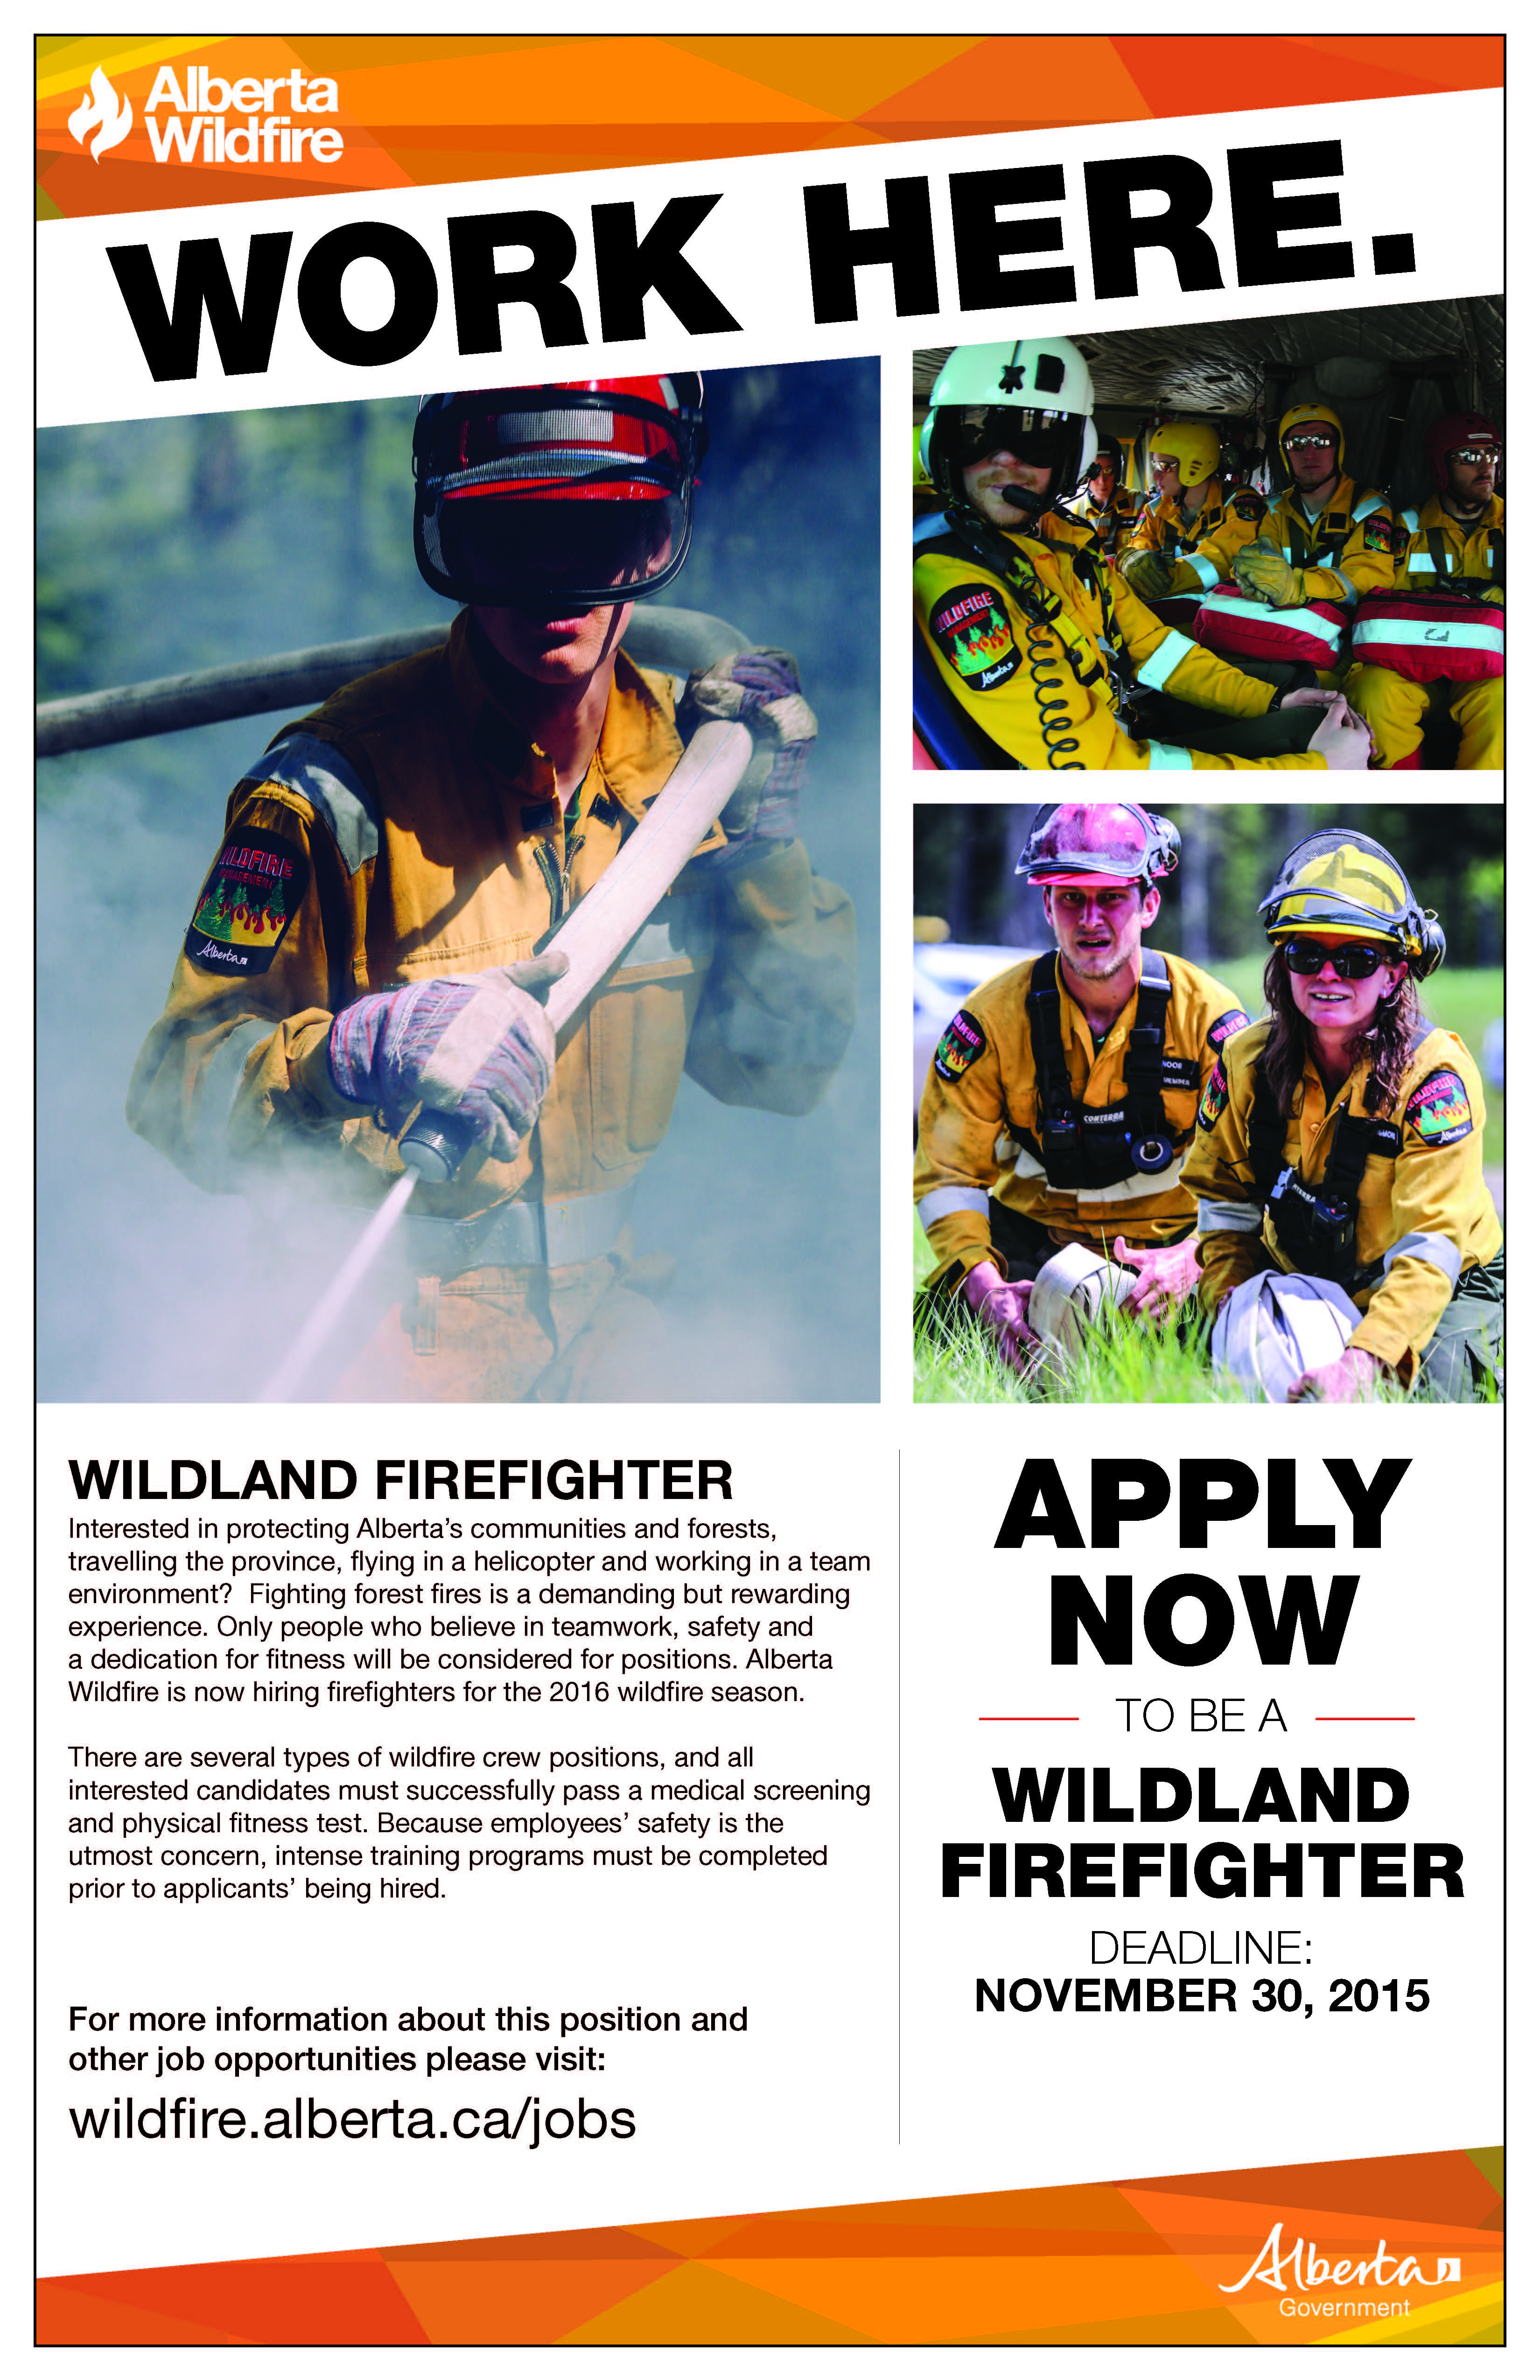 Recruitment_Firefighter_Poster_11x17_CMYK_2016_2.jpg